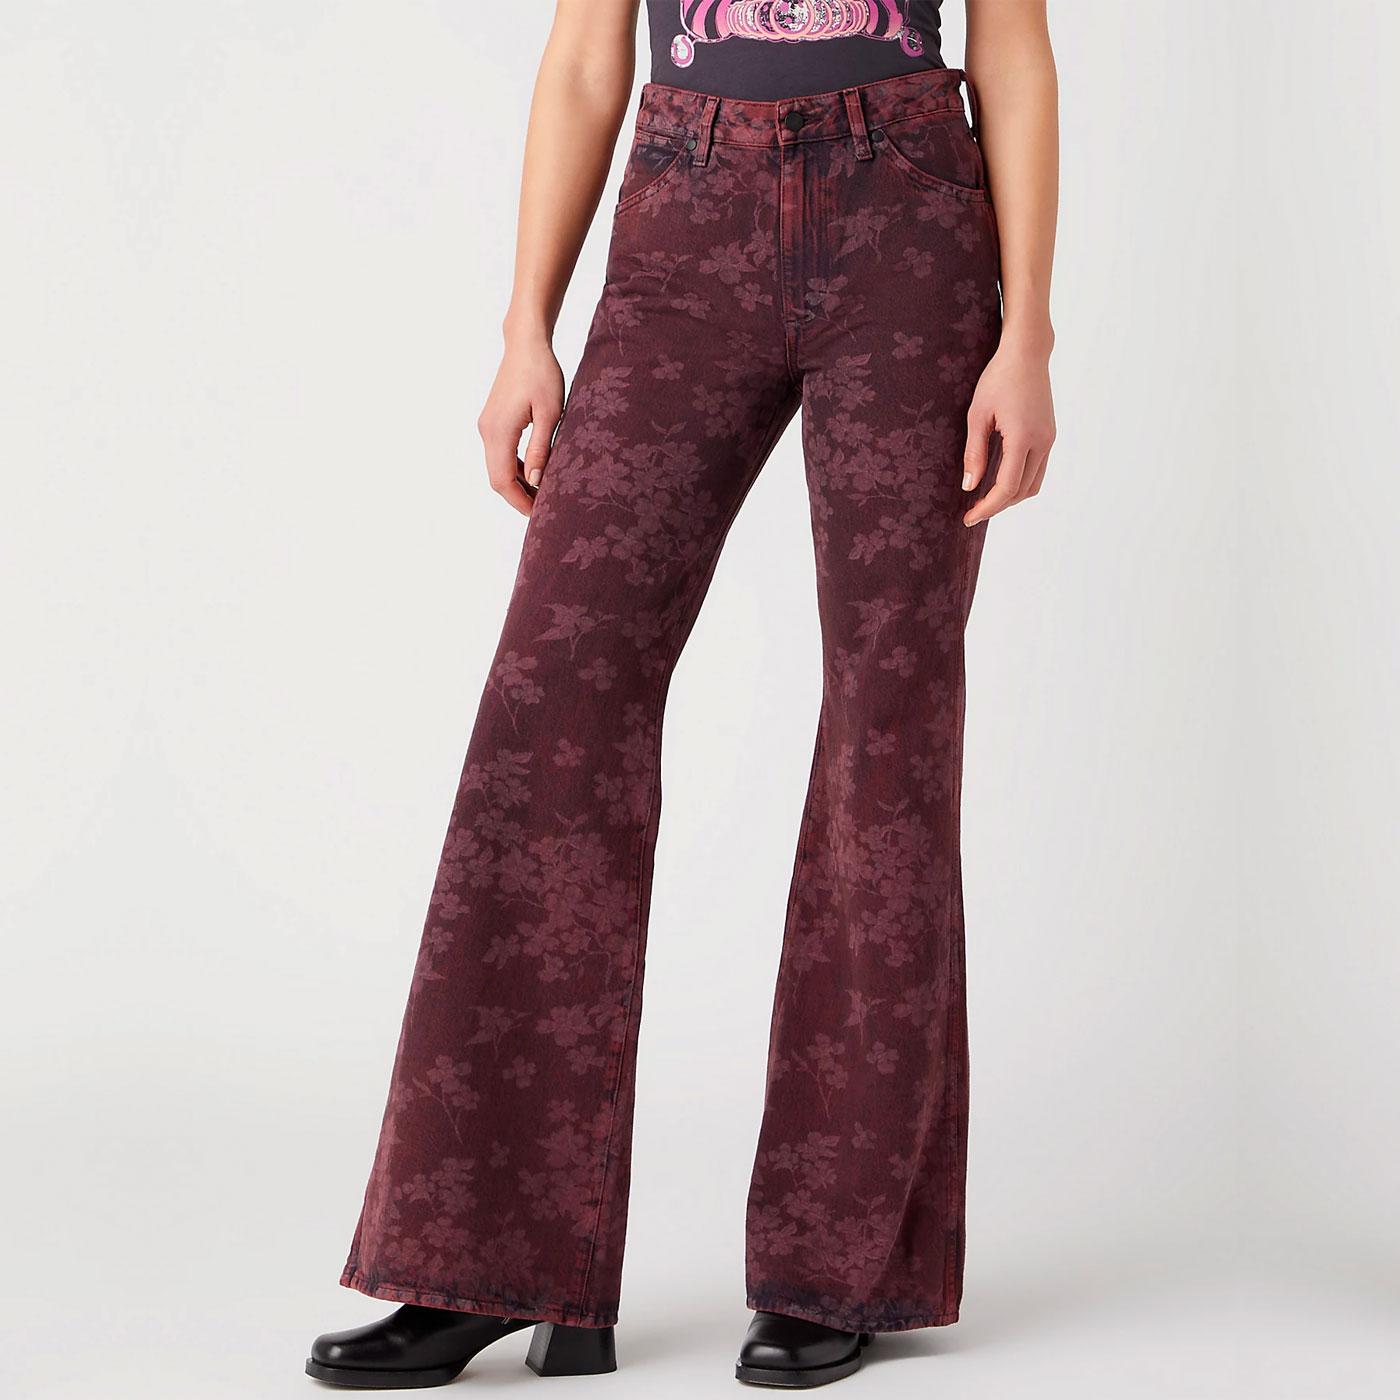 Wanderer Wrangler Retro 70s Flared Floral Jeans MD